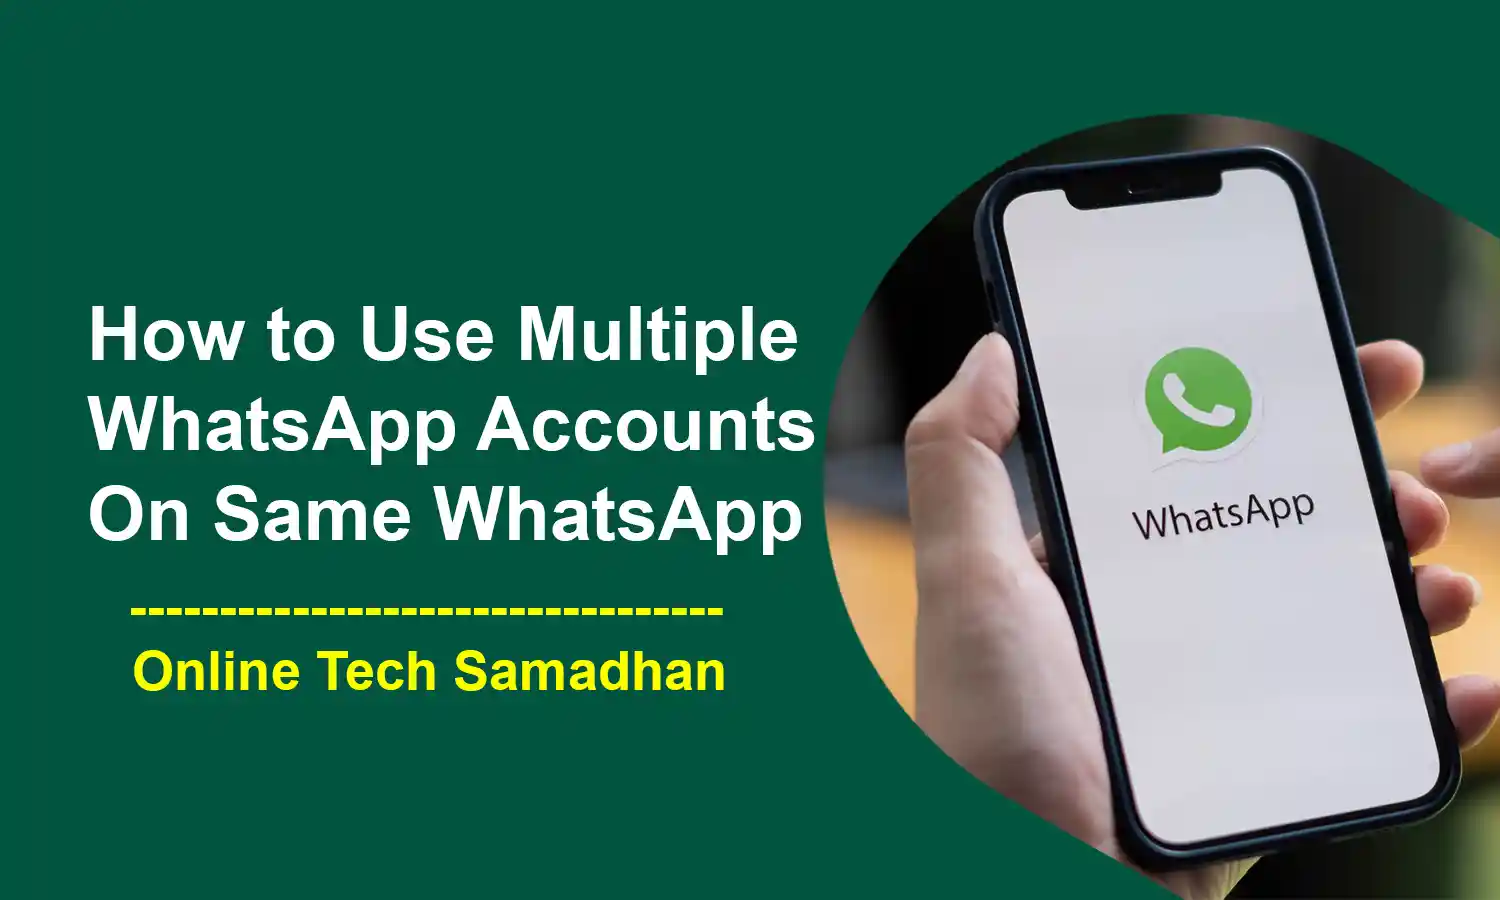 How to Use Multiple WhatsApp Accounts in the Same WhatsApp